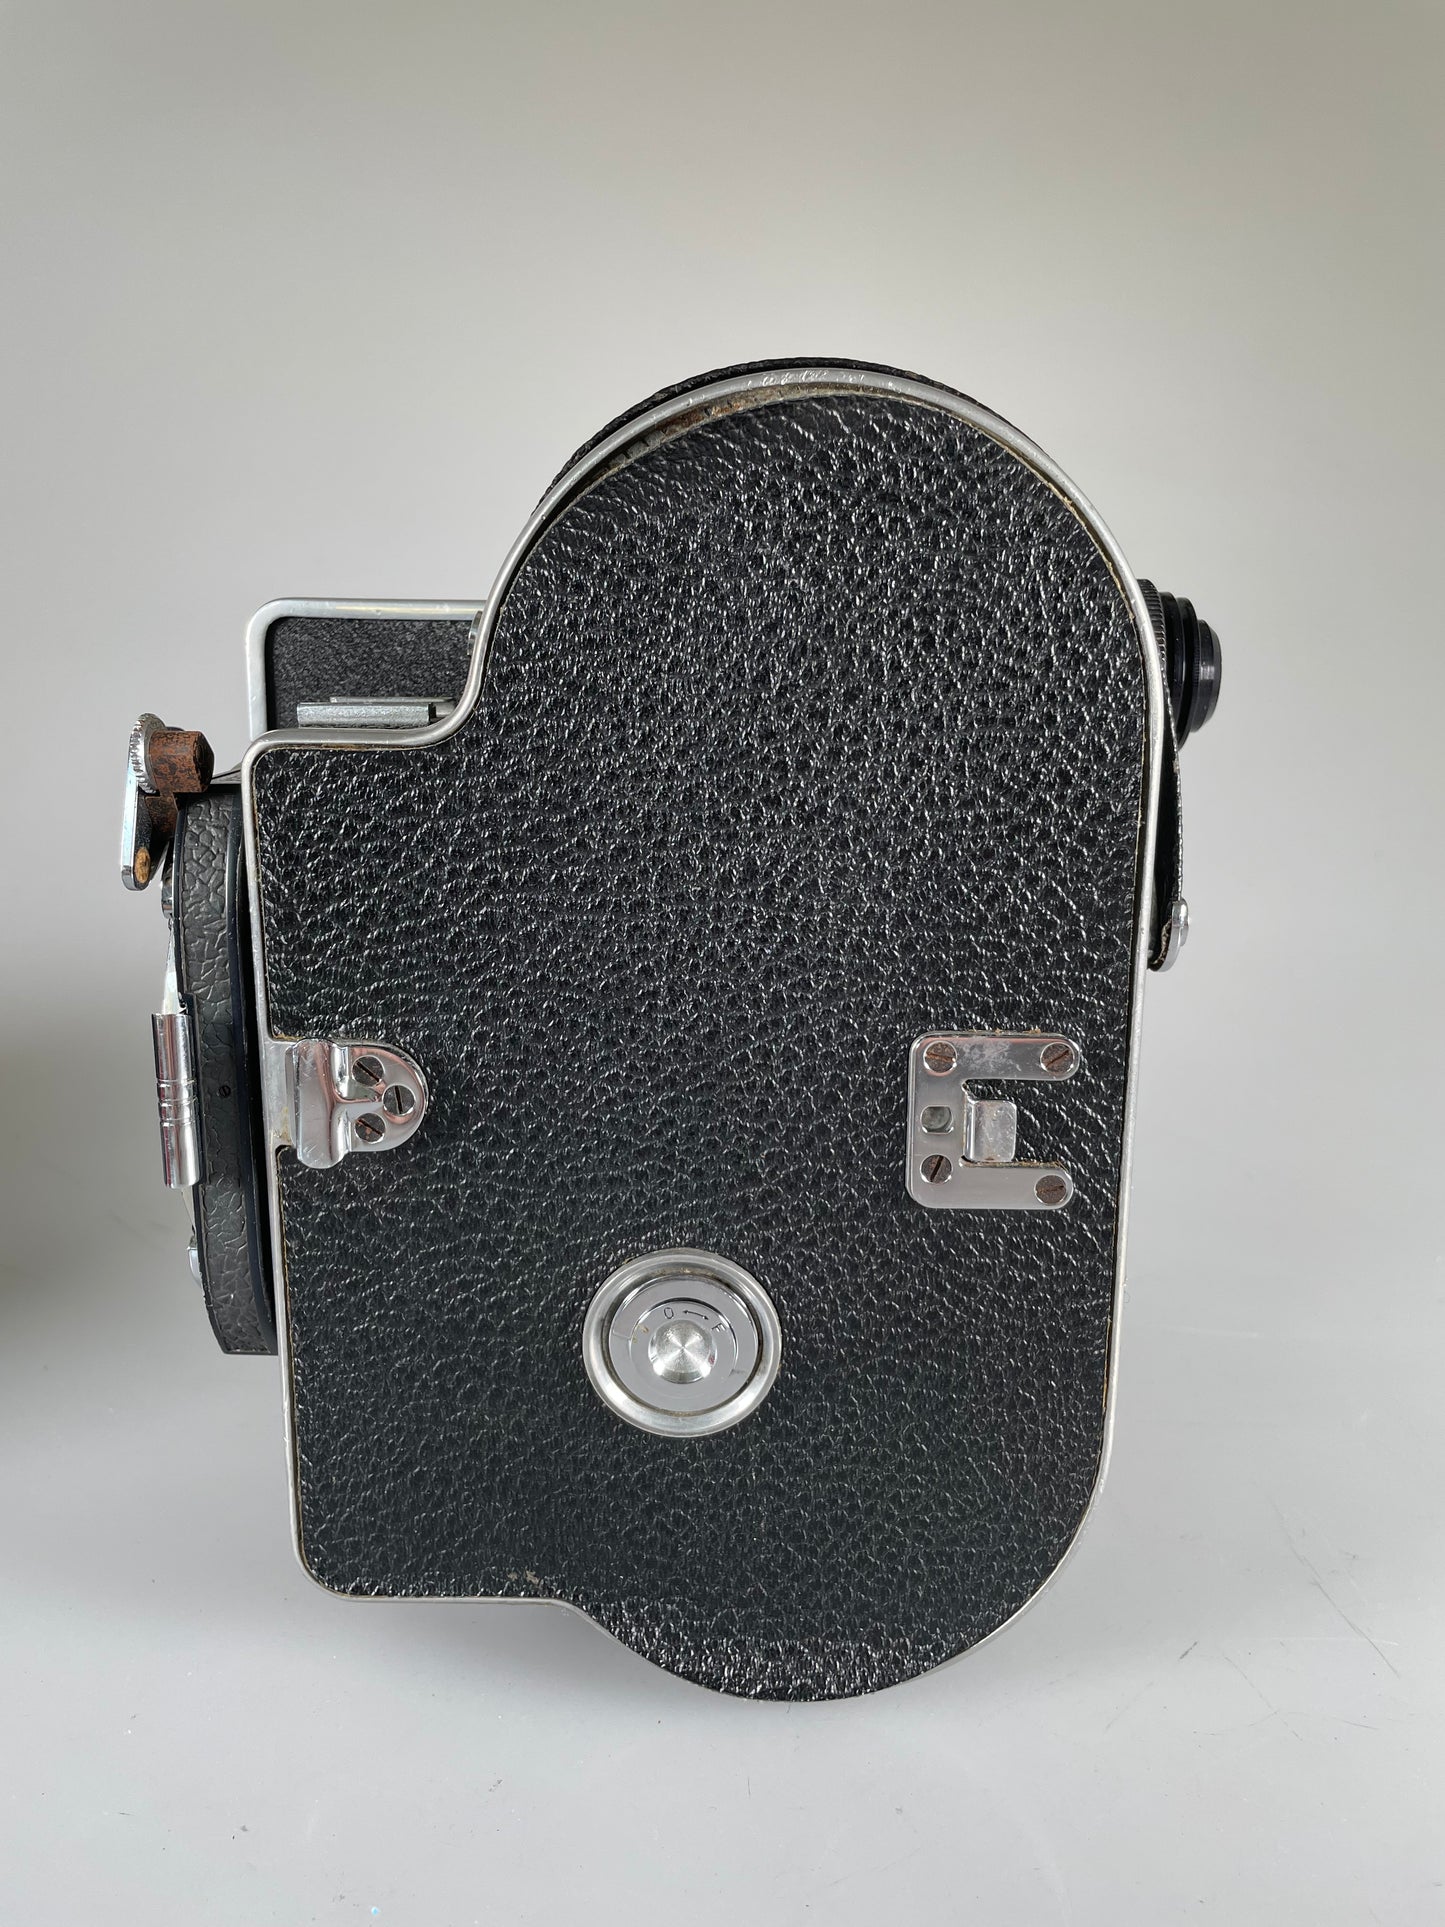 BOLEX Reflex REX 2 Vintage H16 16mm MOVIE CAMERA